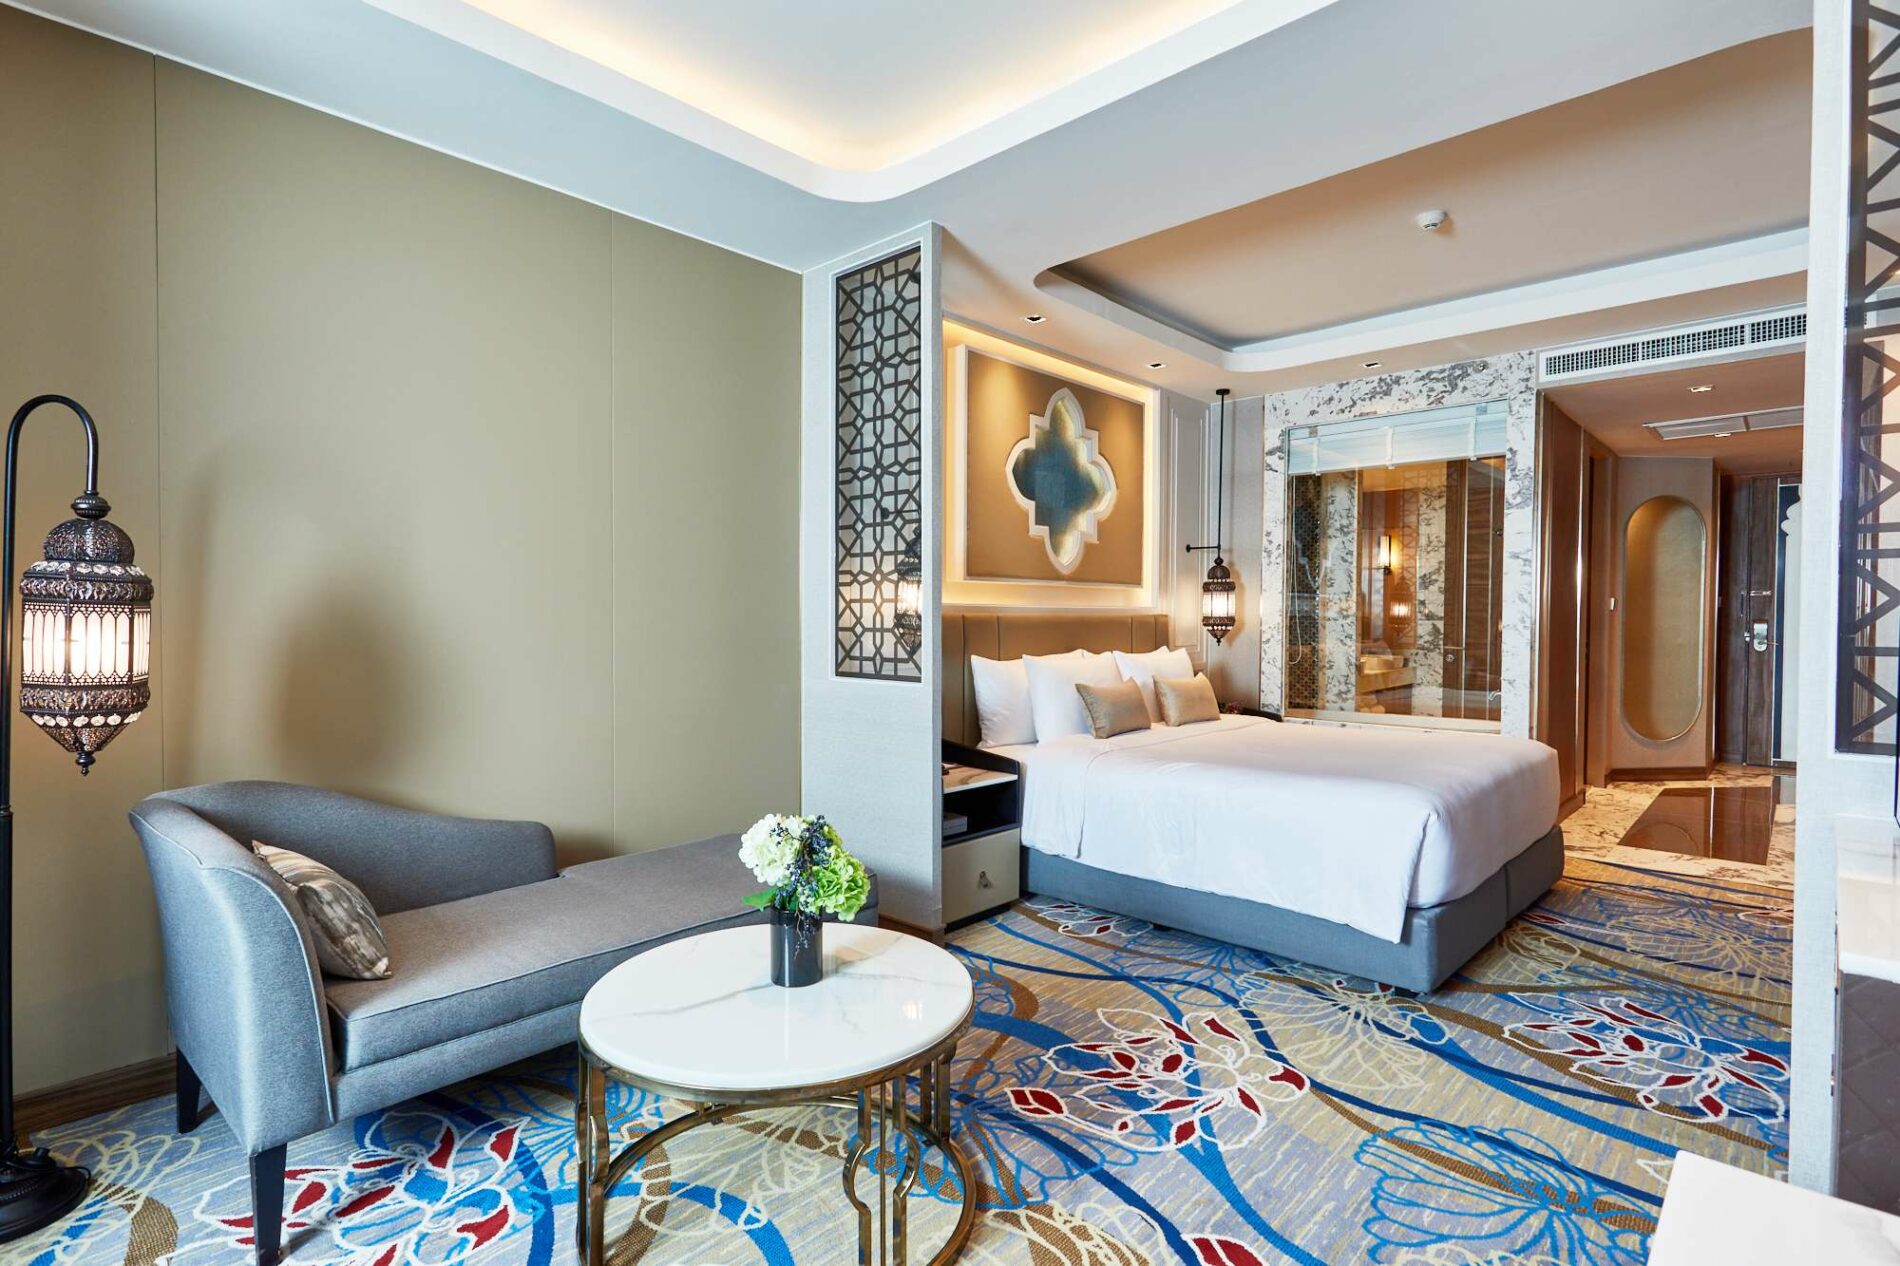 Valia Hotel Bangkok - Accommodations